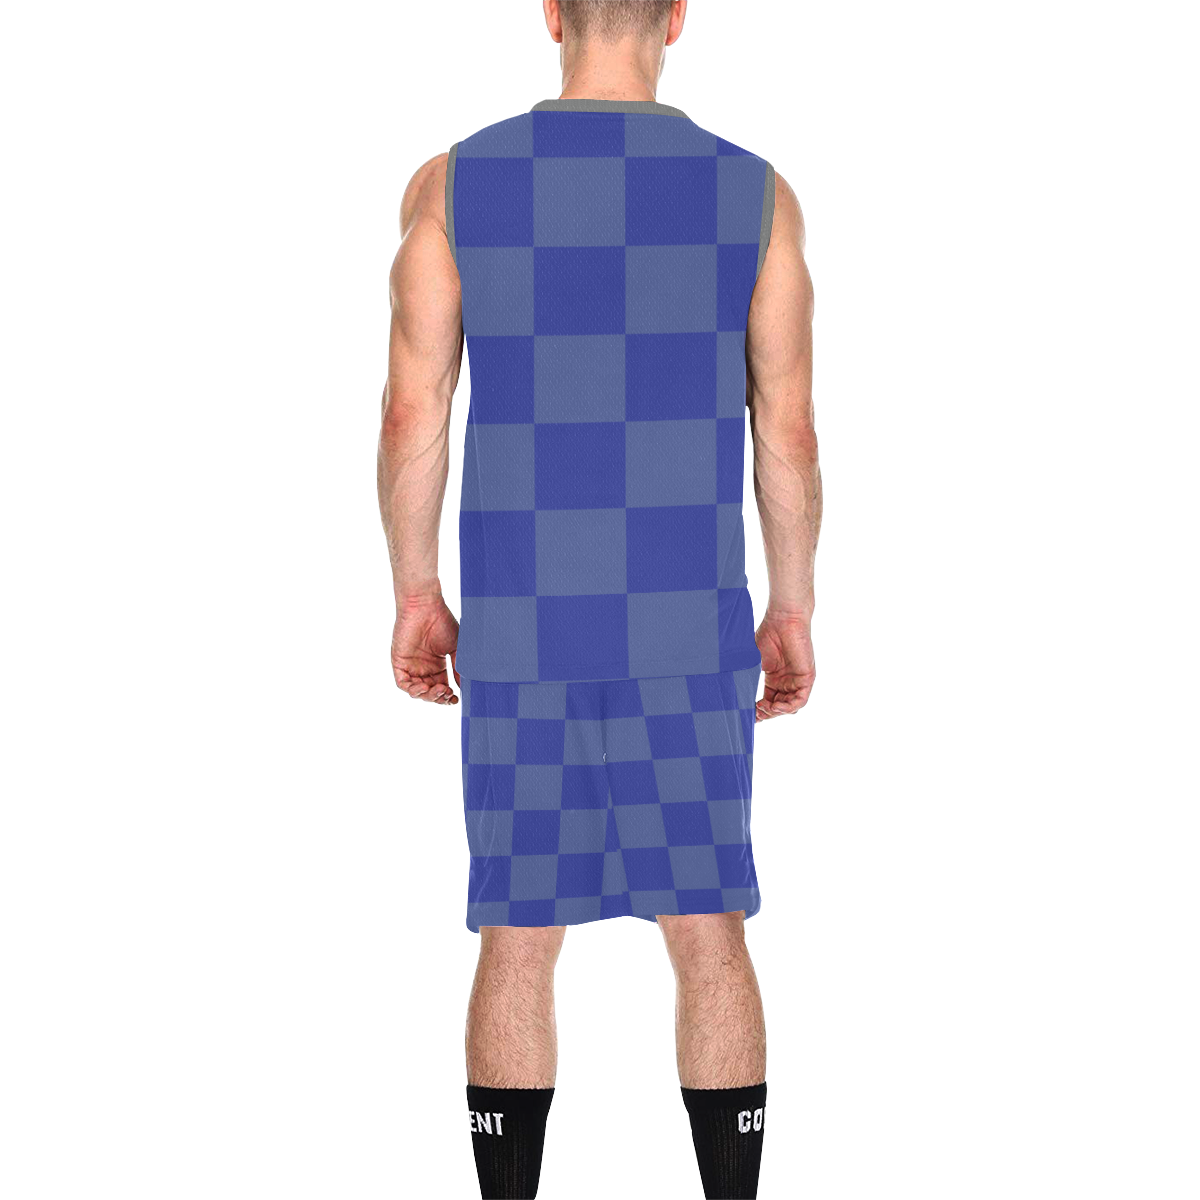 Blue Checkered All Over Print Basketball Uniform